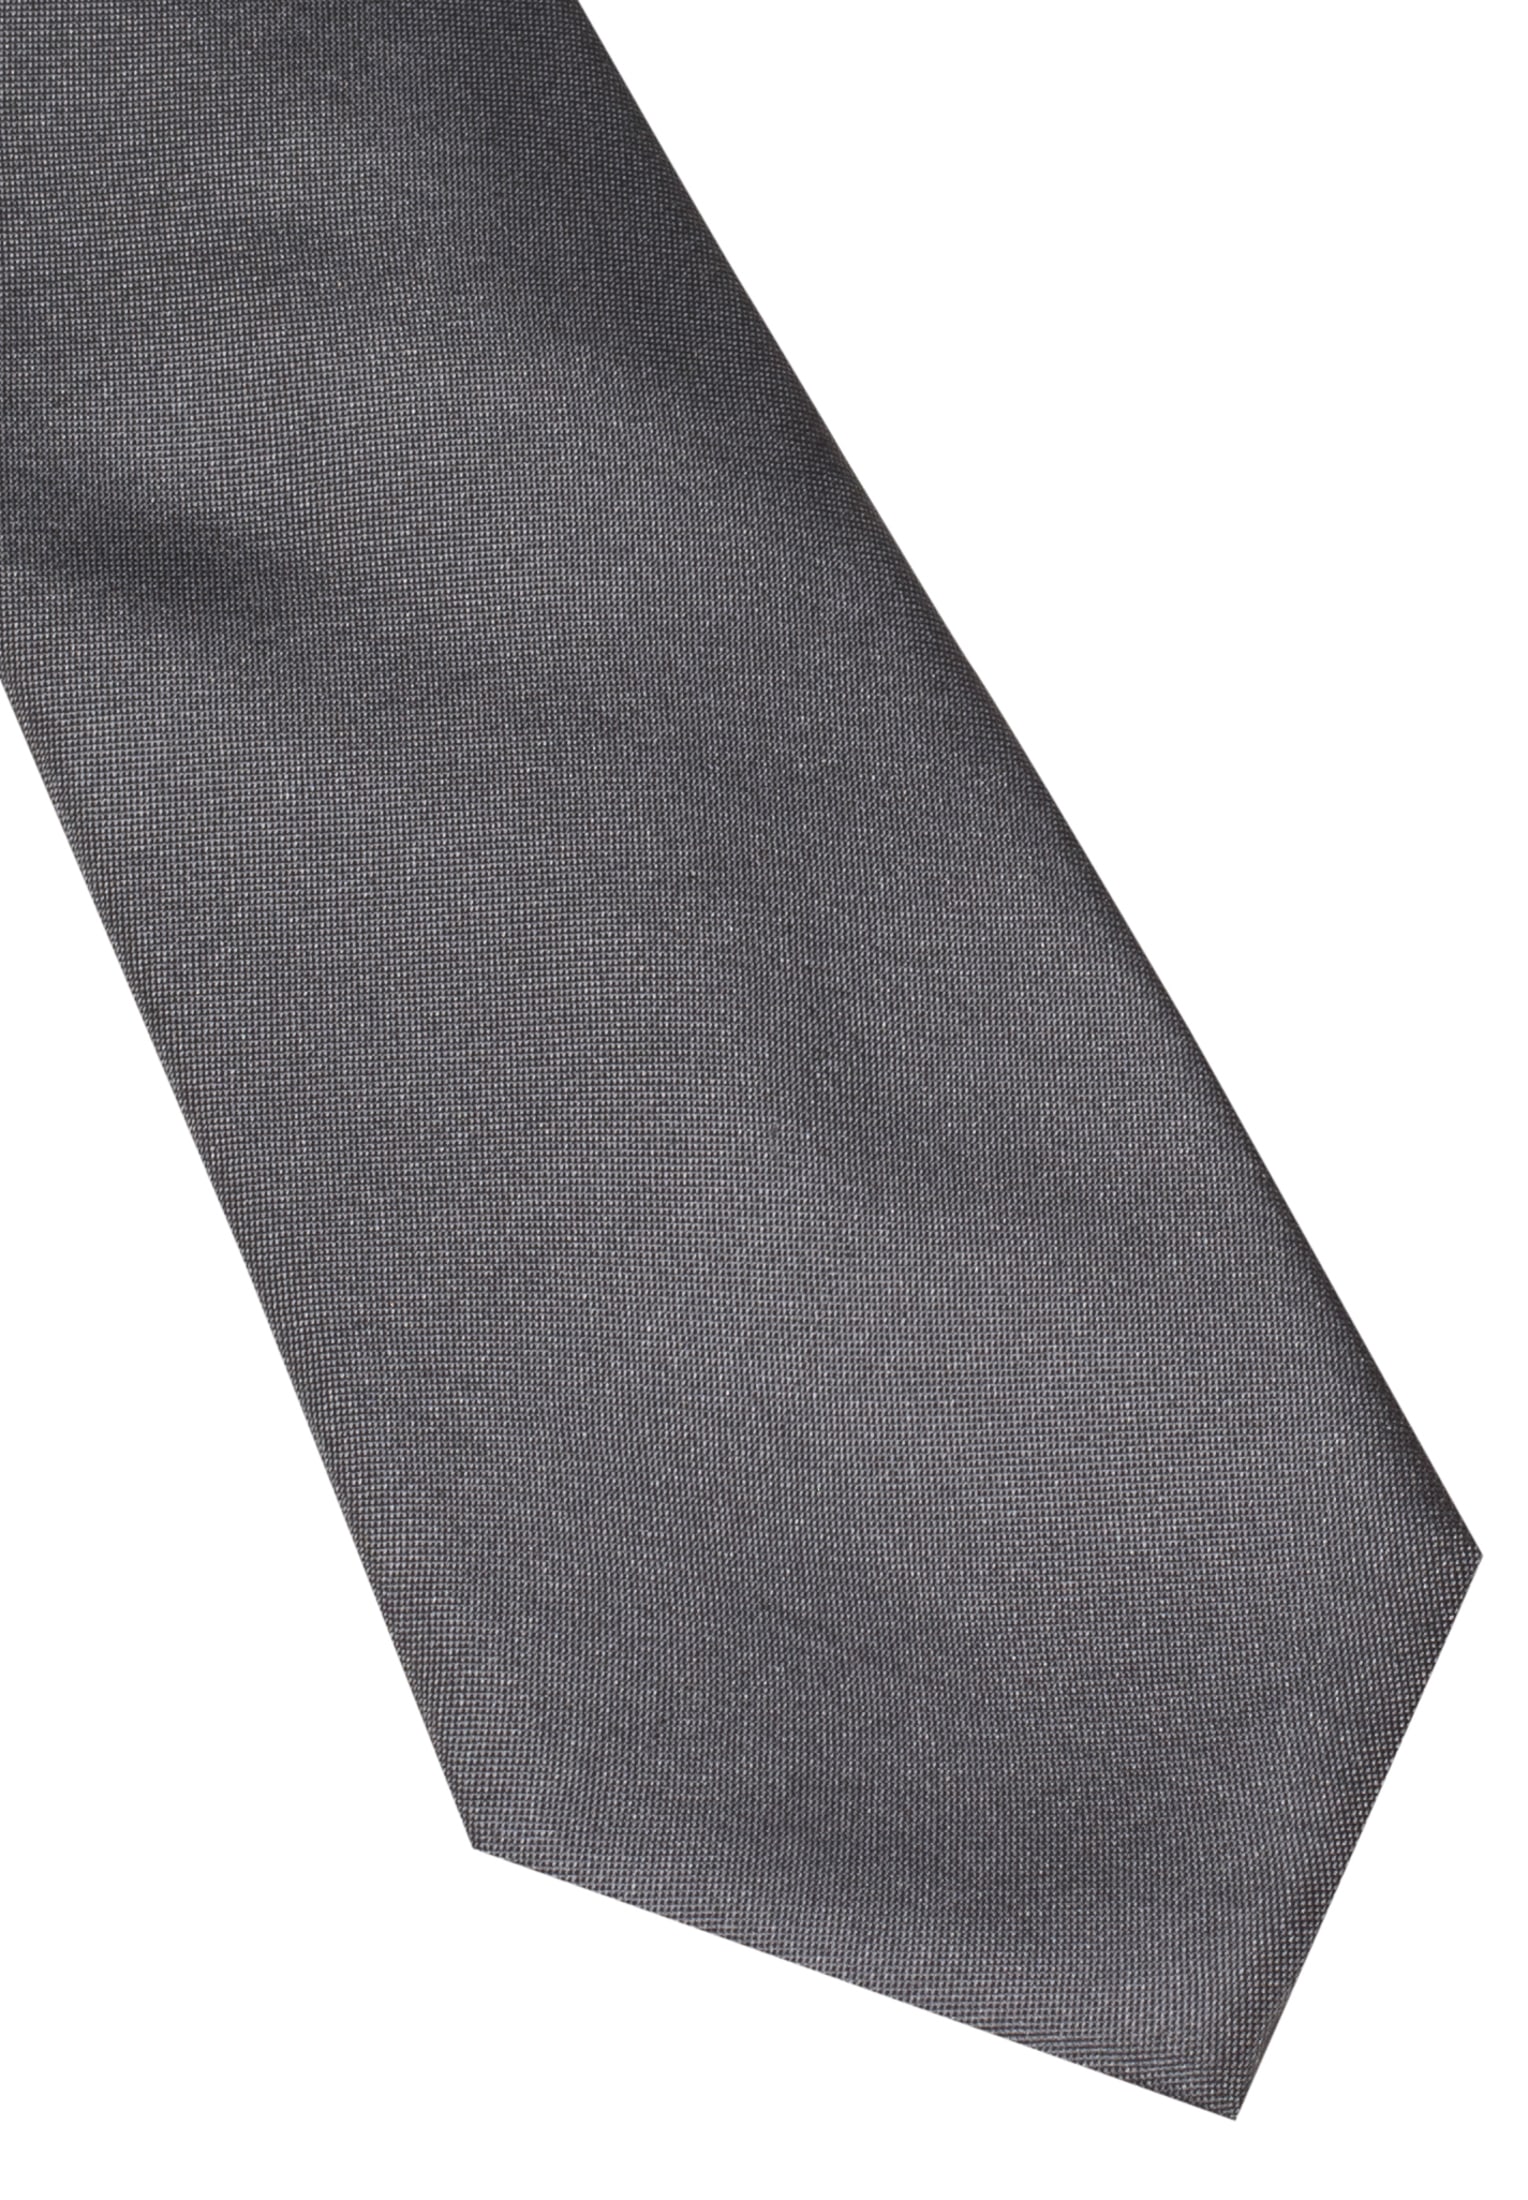 Krawatte in silber unifarben silber 142 1AC00025-03-11-142 | | 